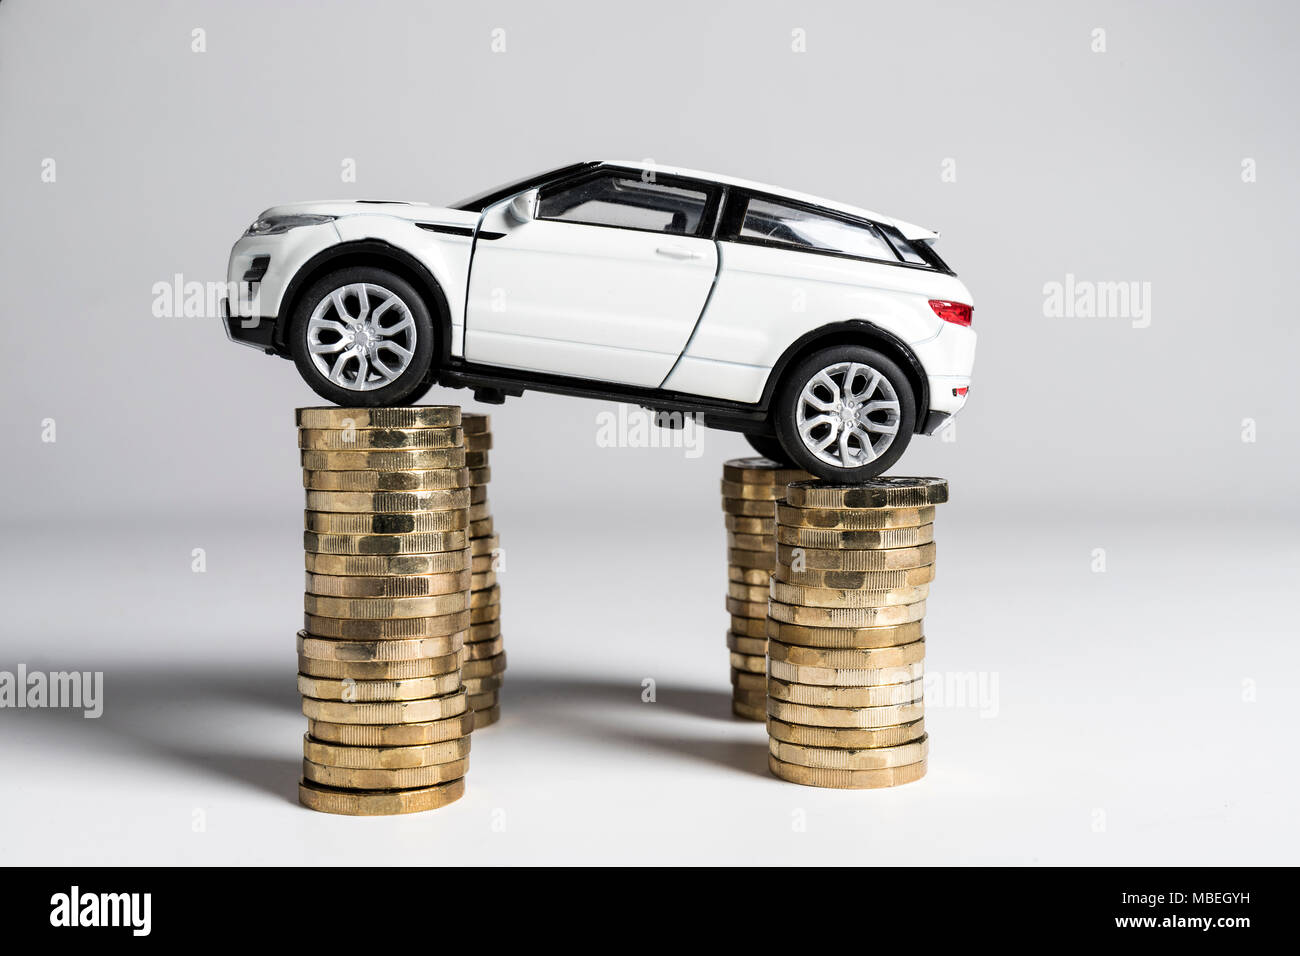 A toy Land Rover Evoque balanced on piles of £1 coins. Stock Photo